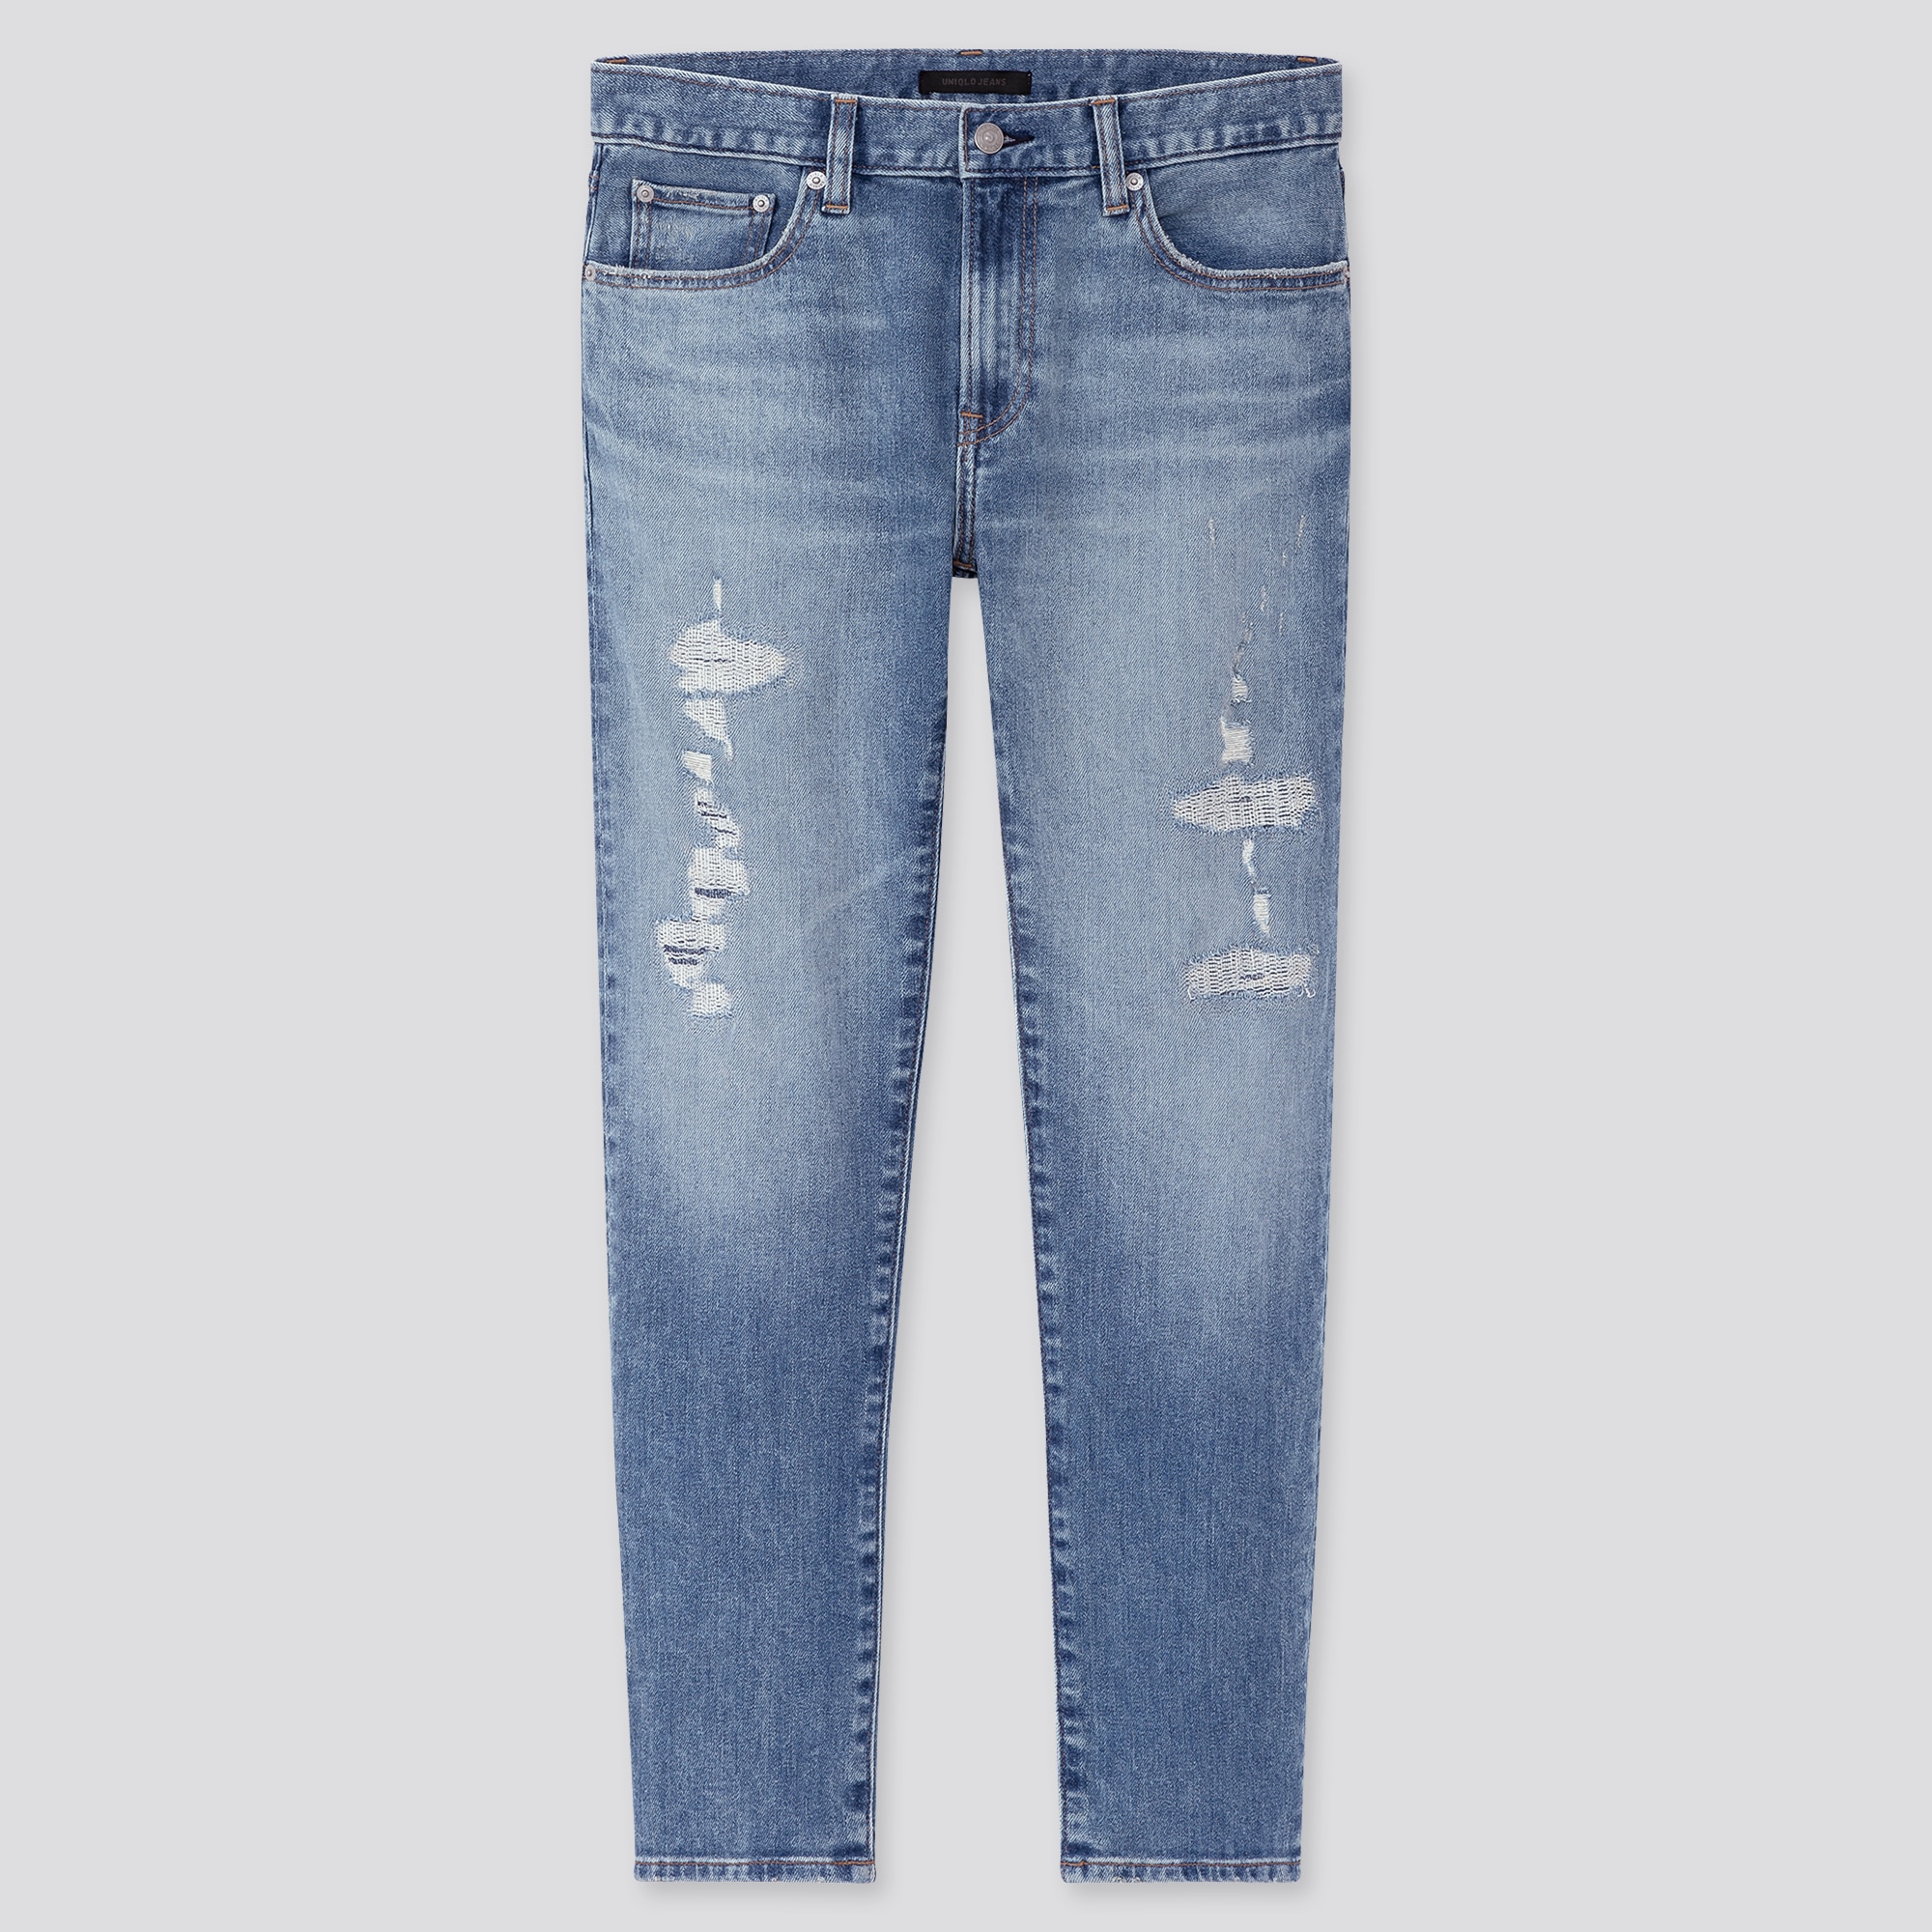 uniqlo damaged jeans